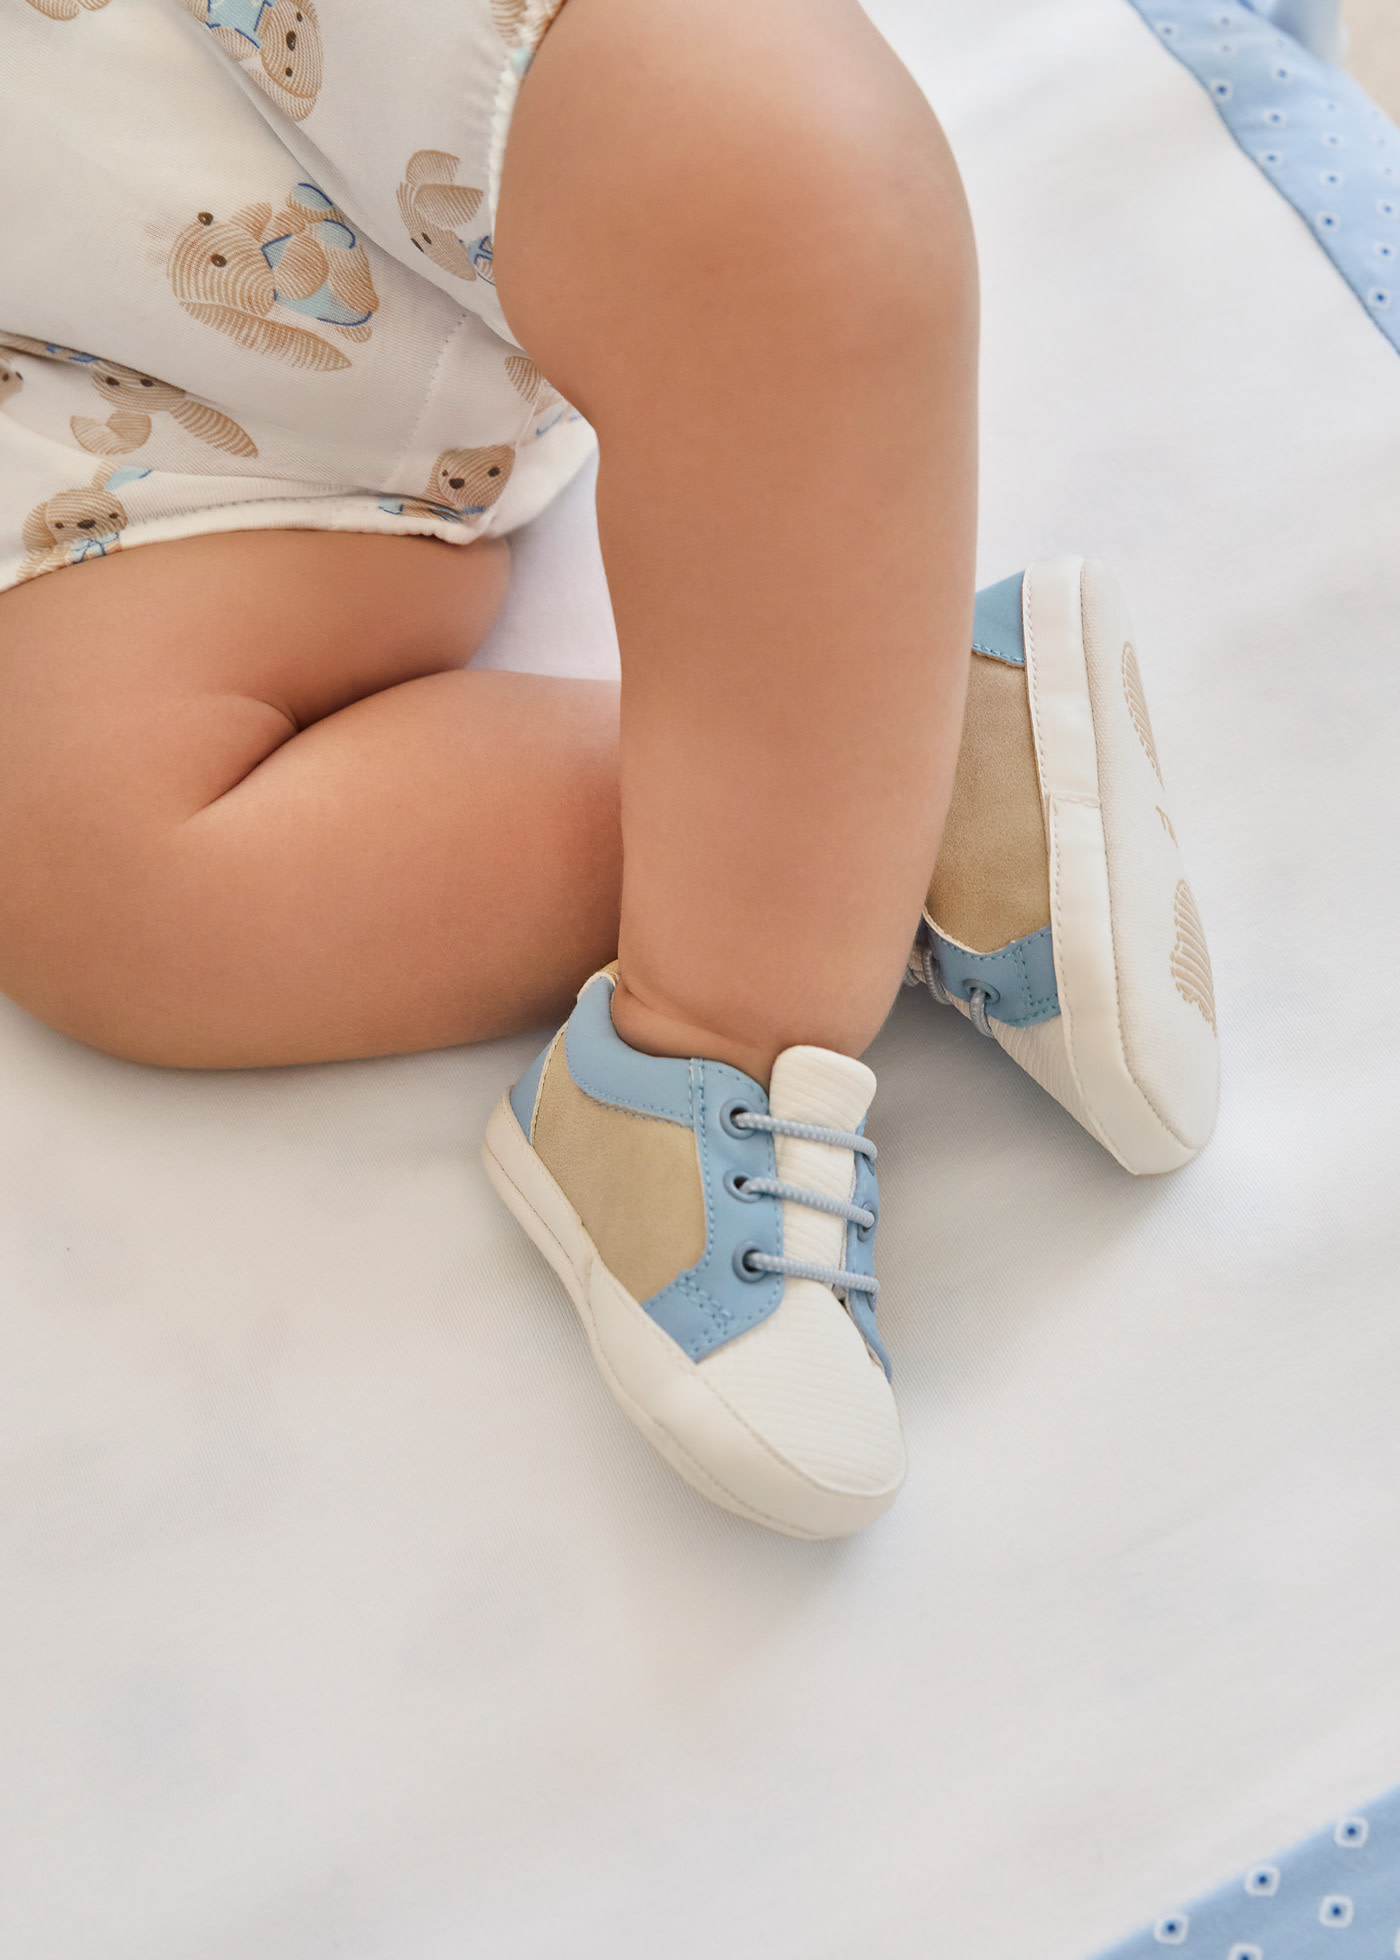 Newborn sneakers